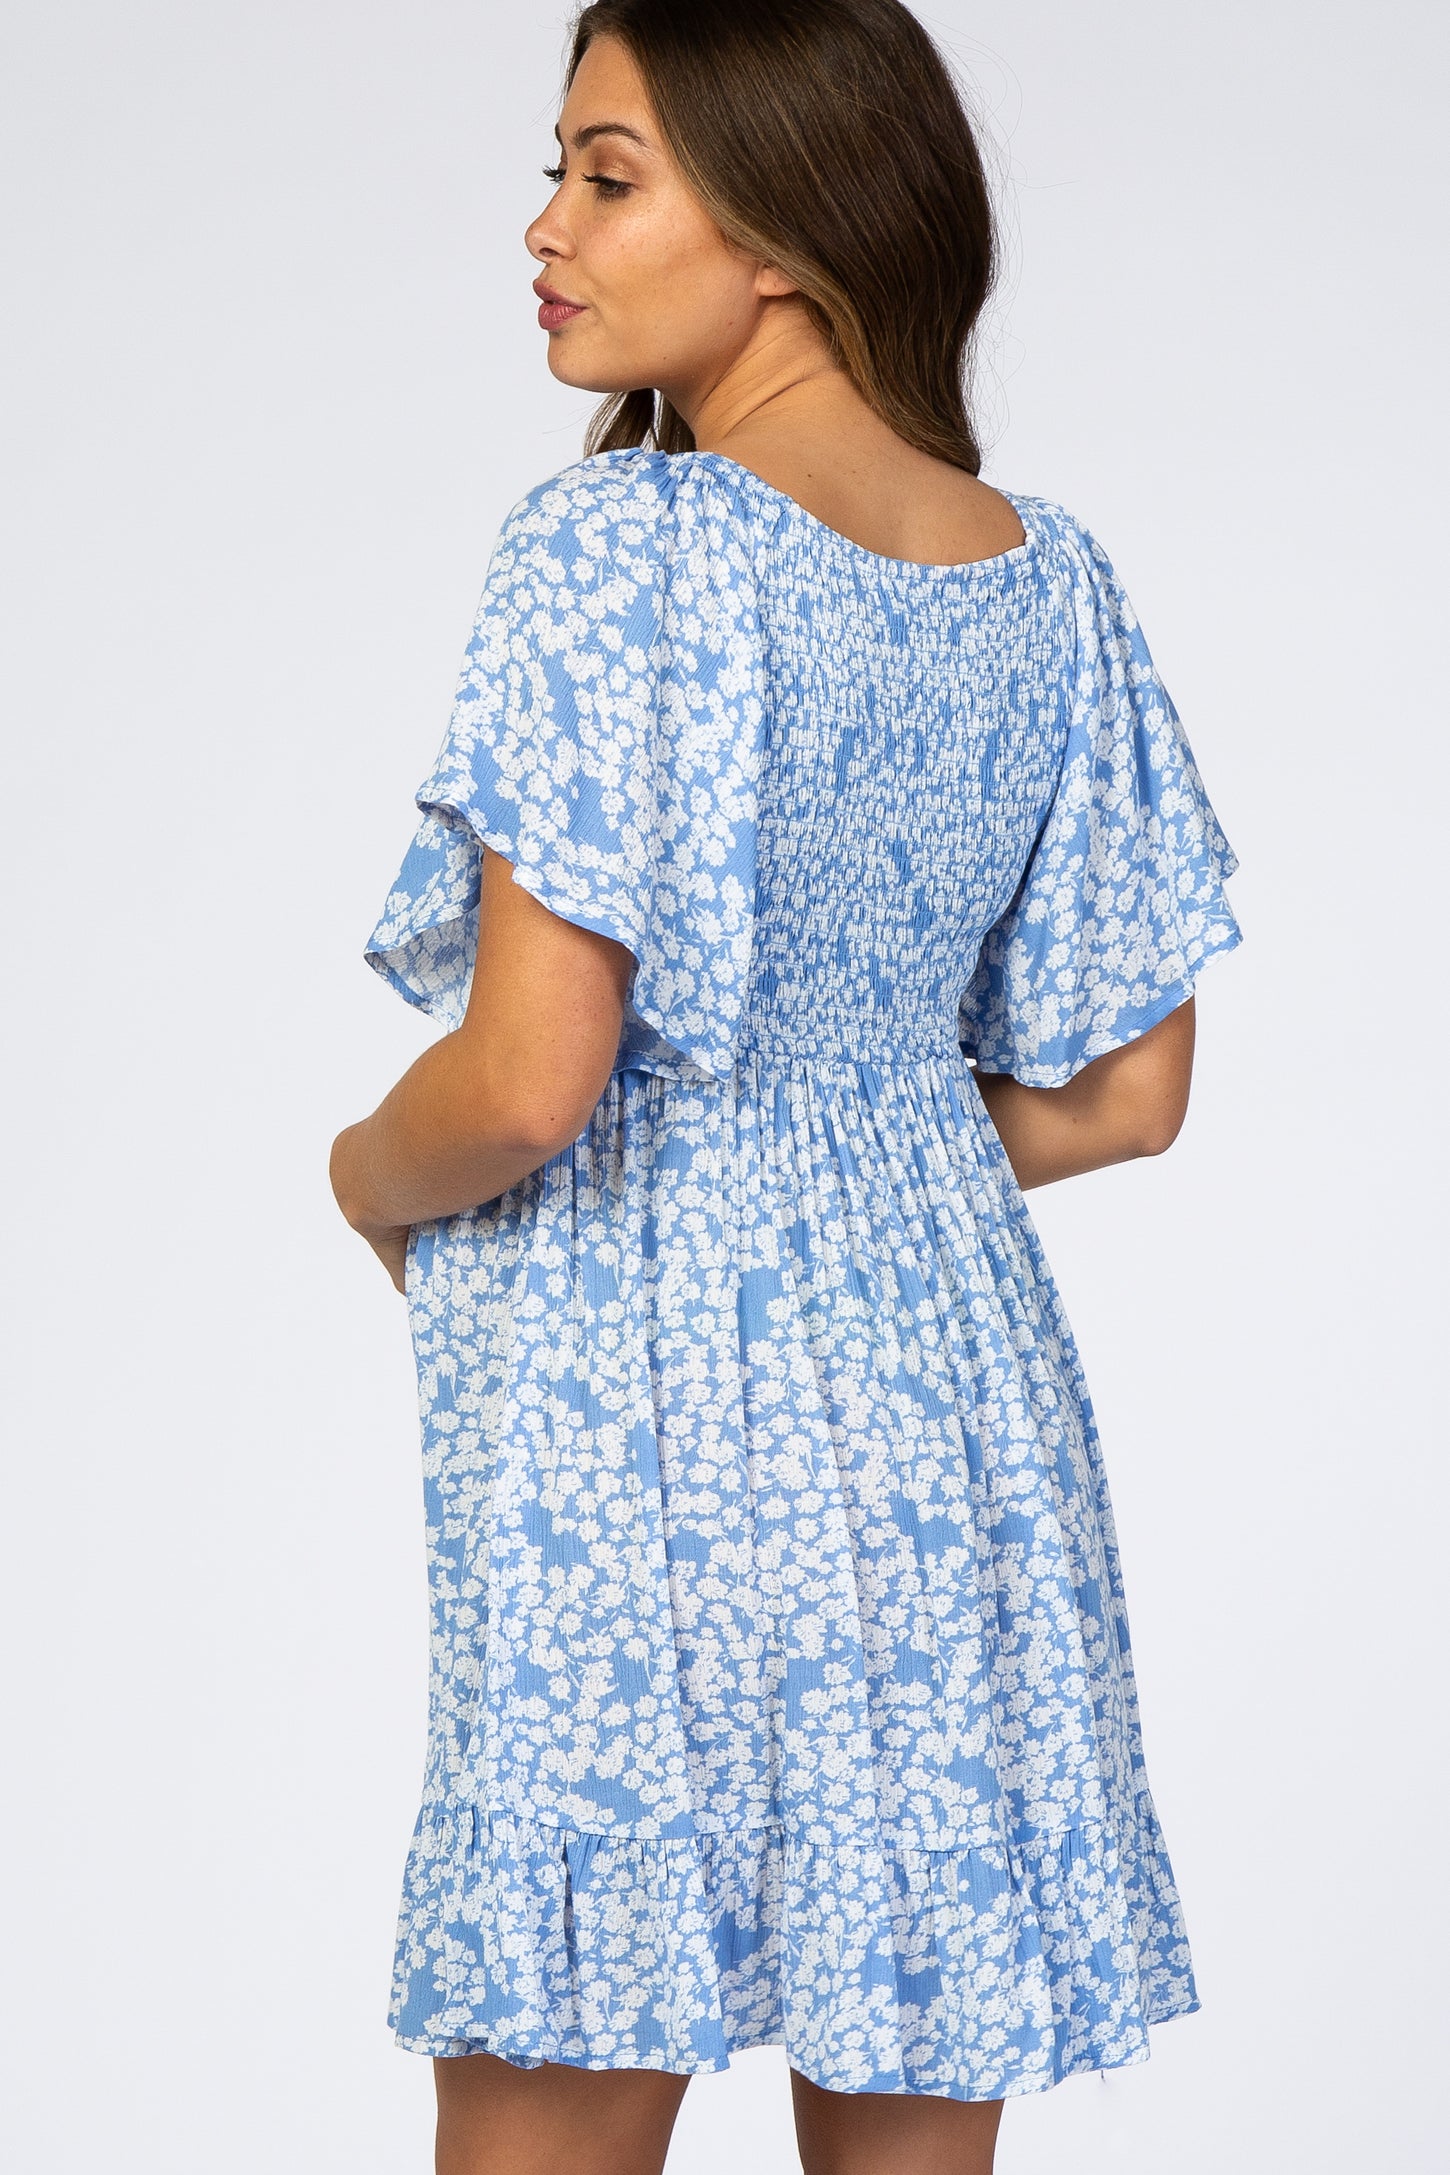 Blue Floral Smocked Ruffle Maternity Dress– PinkBlush